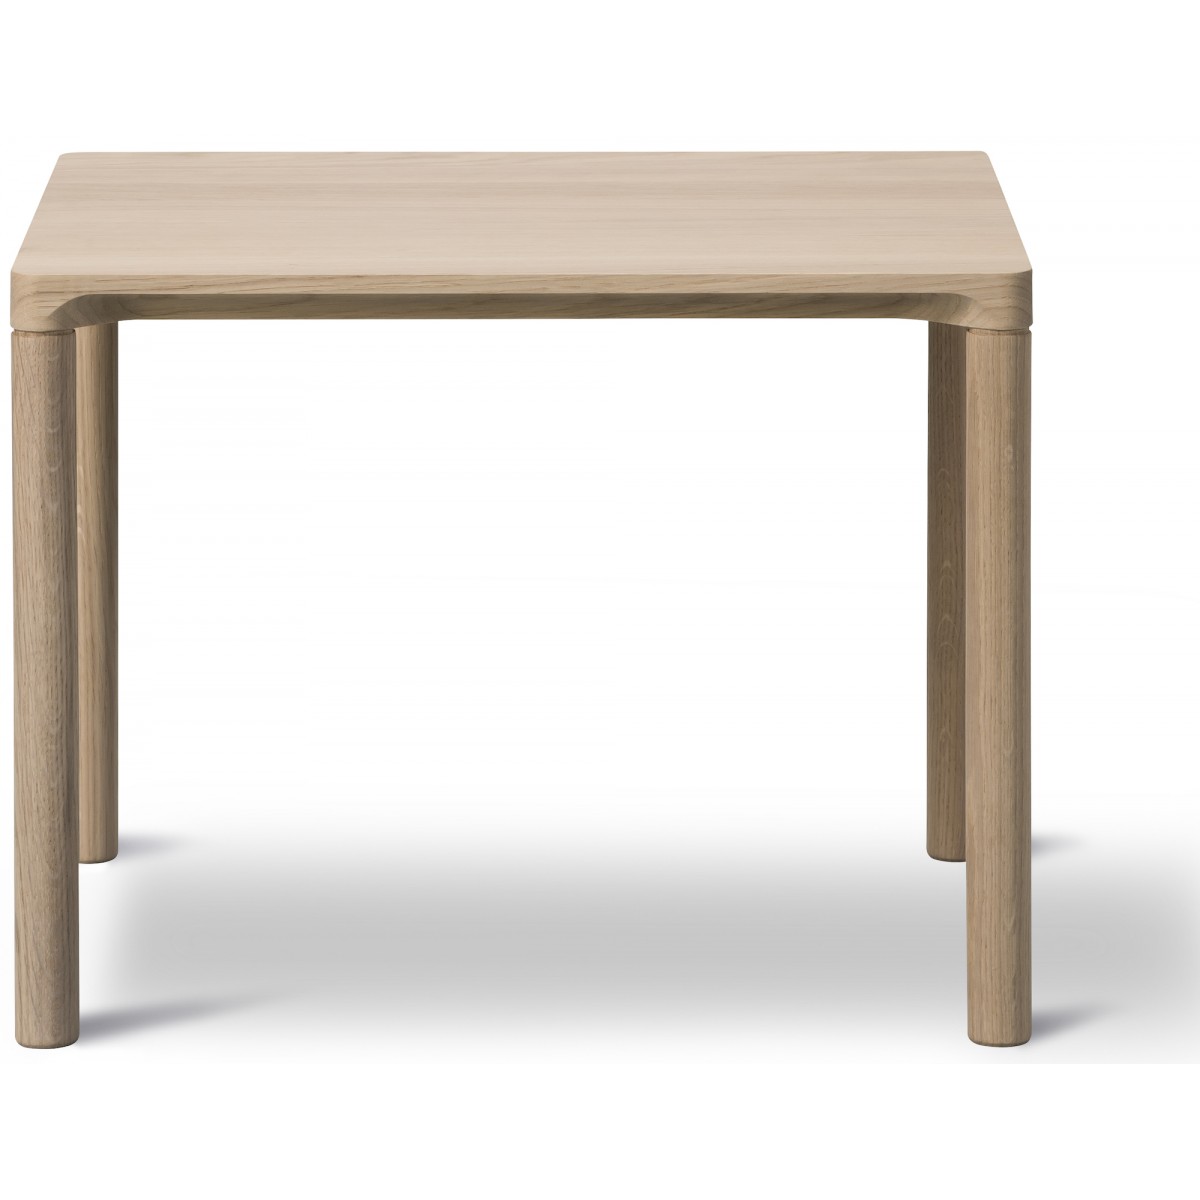 lacquered oak – 46.5 x 39 cm – Piloti 6705 coffee table